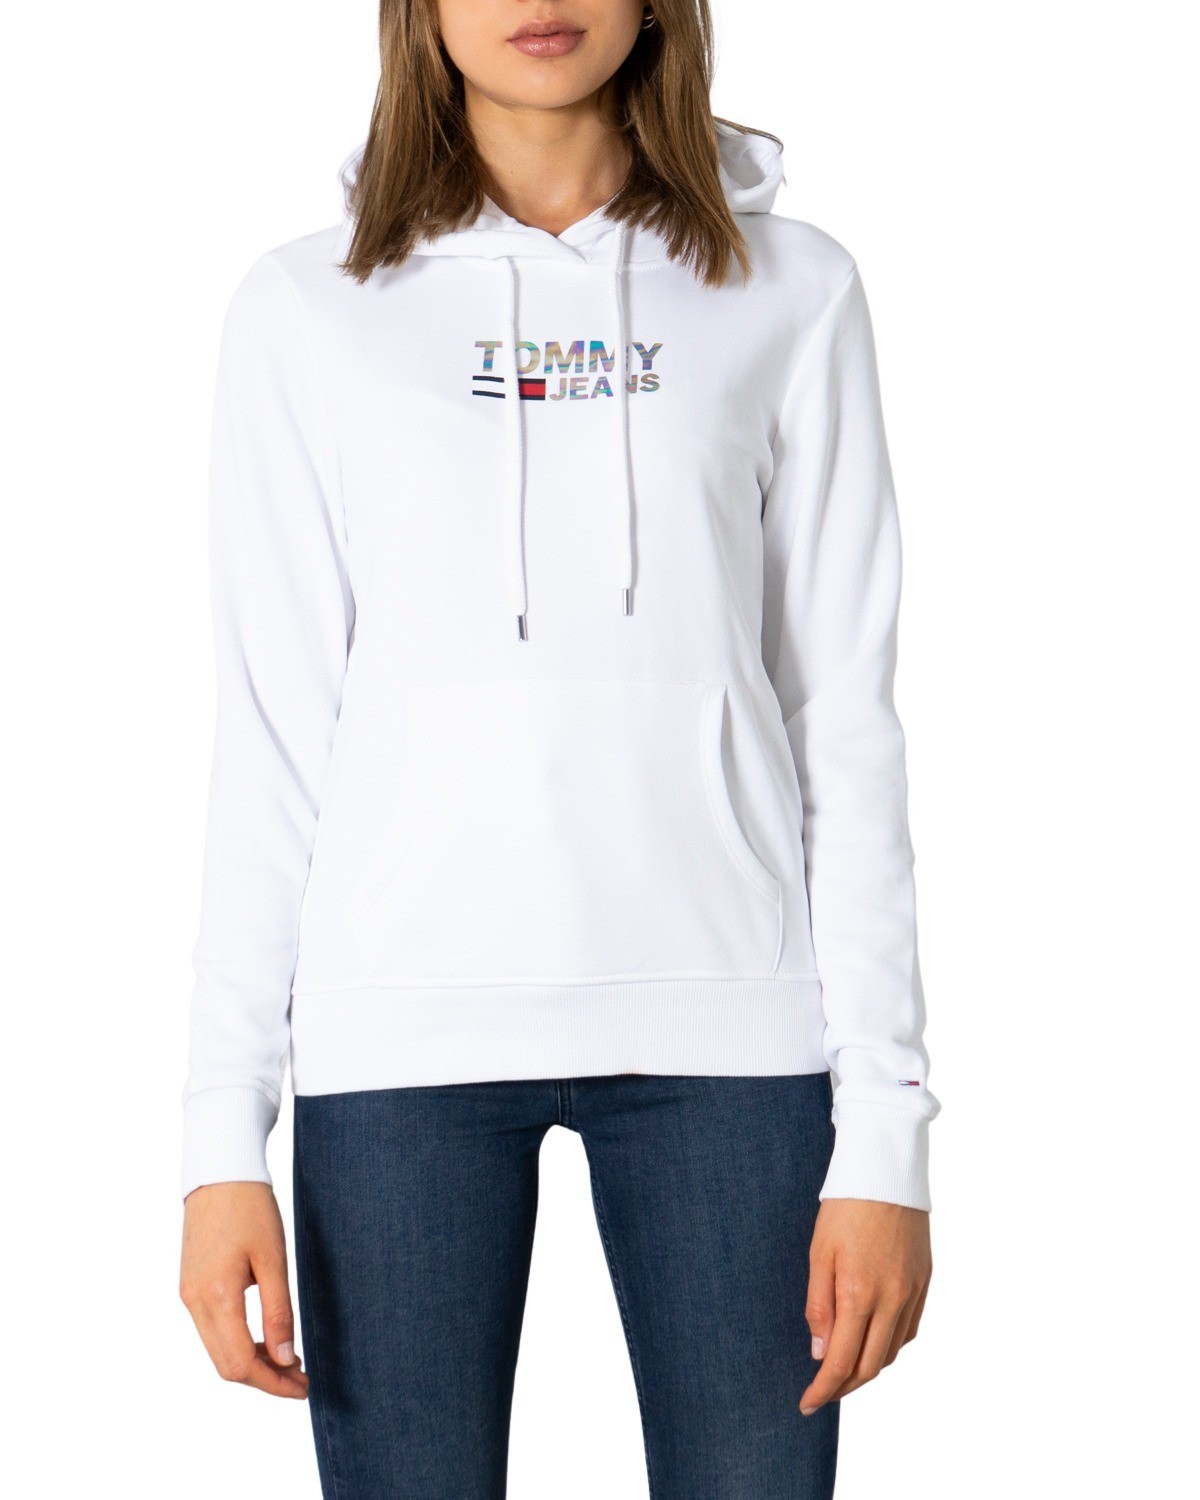 sweatshirt women's TOMMY HILFIGER JEANS white GD214 - ZOOODE.COM